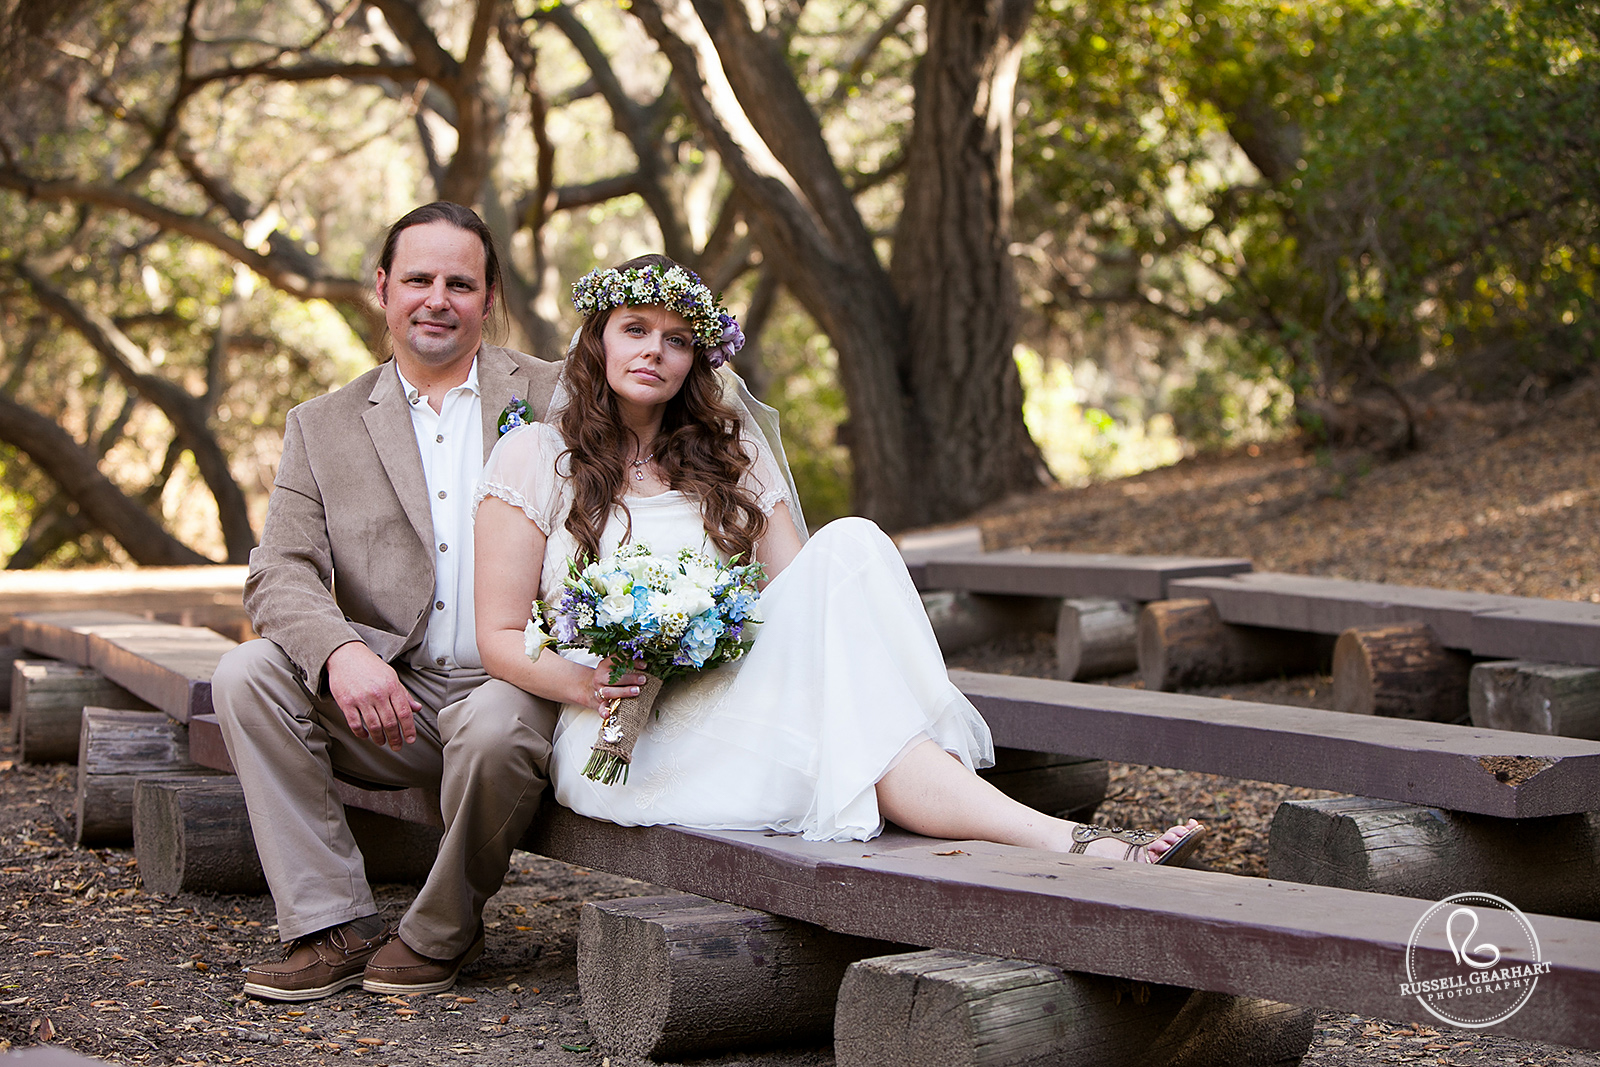 Bohemian Bride and Groom – Anaheim Hills Wedding  – Russell Gearhart Photography – www.gearhartphoto.com  